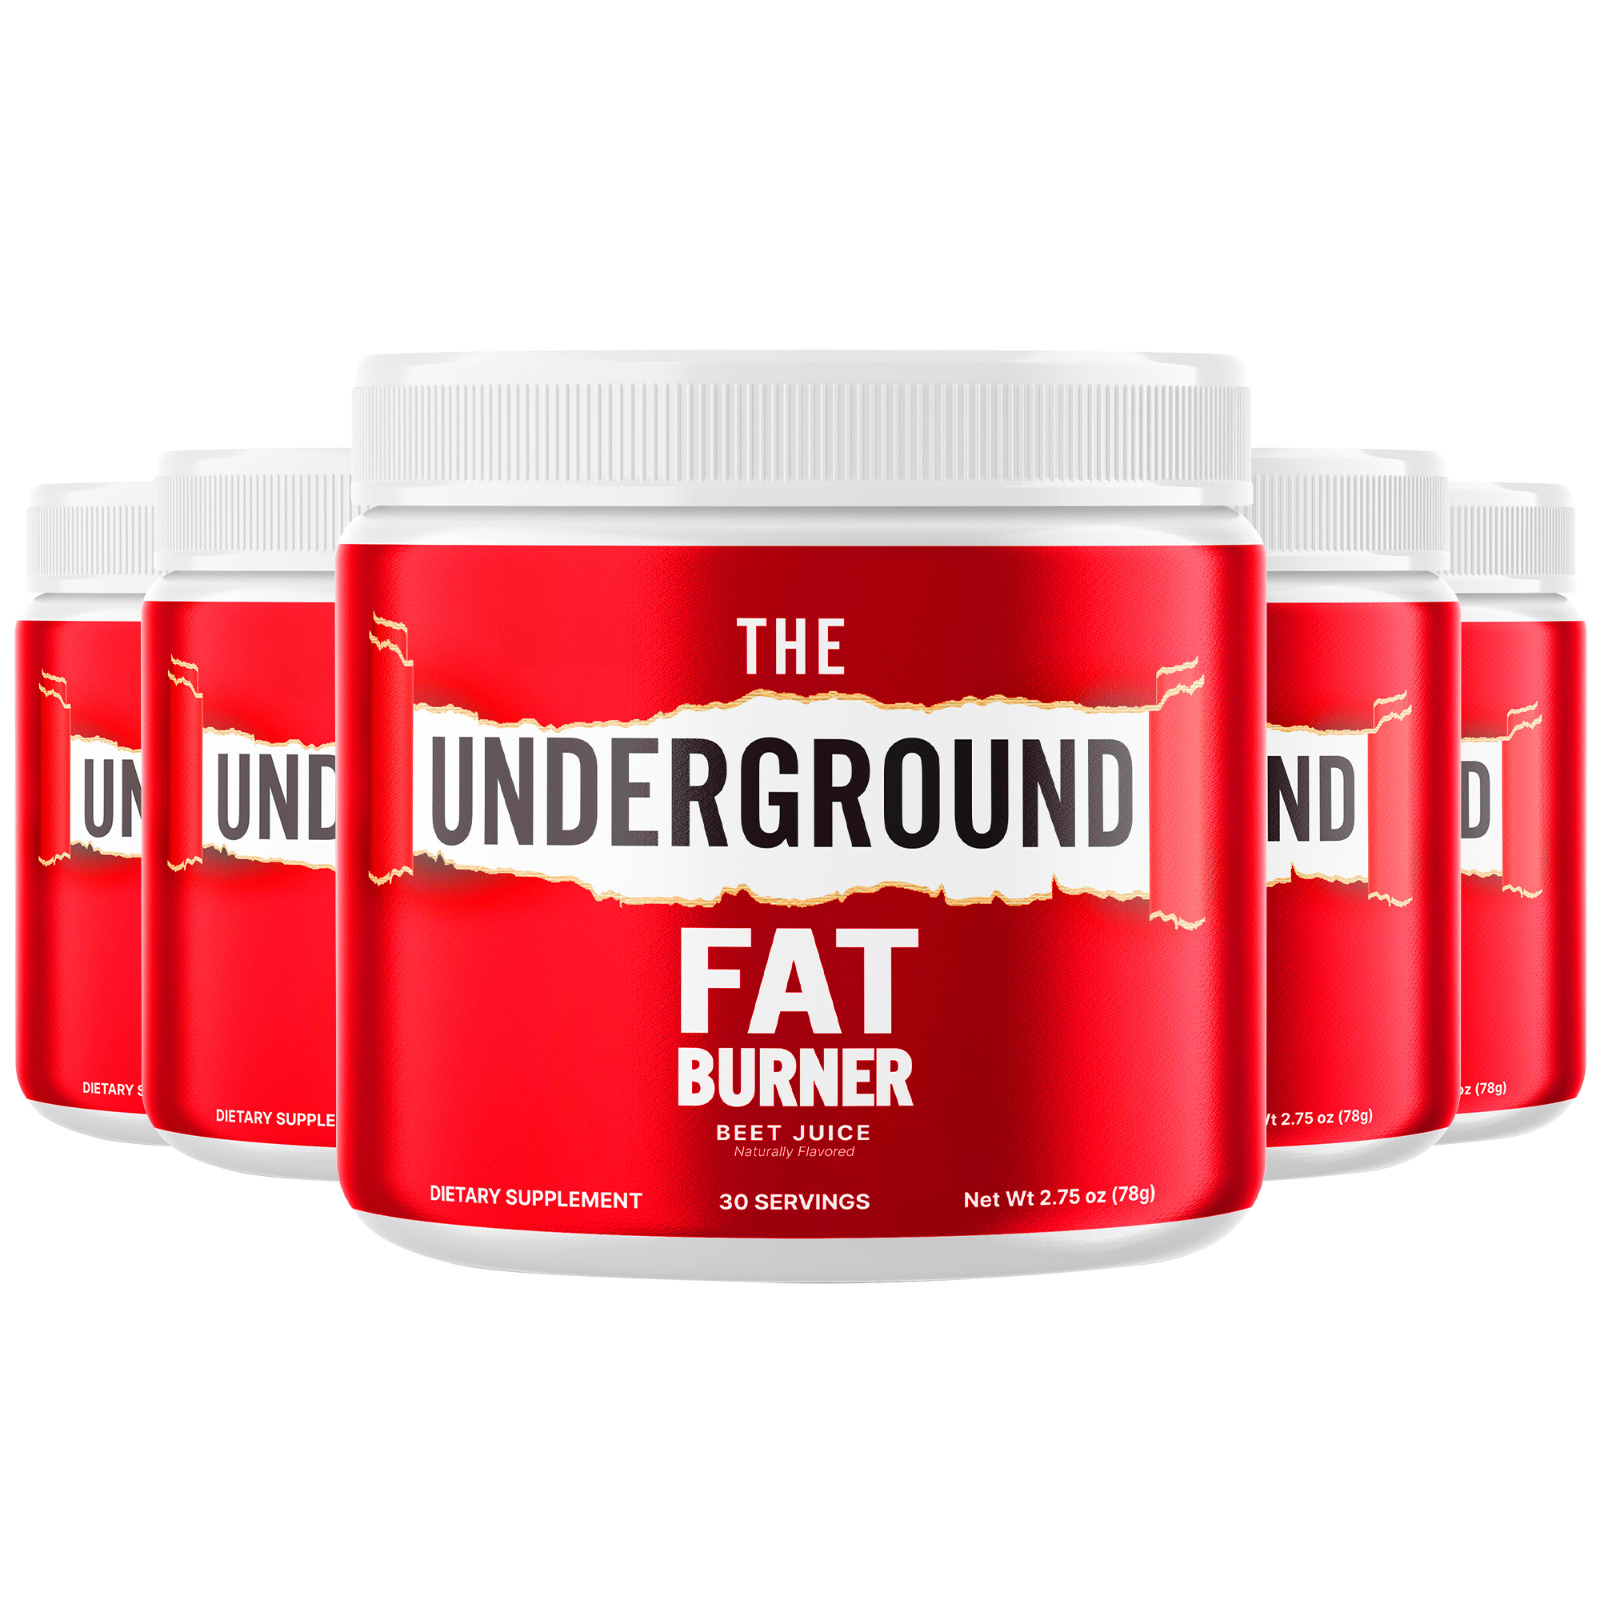 The Underground Fat Burner - Official Formula (5 Pack)